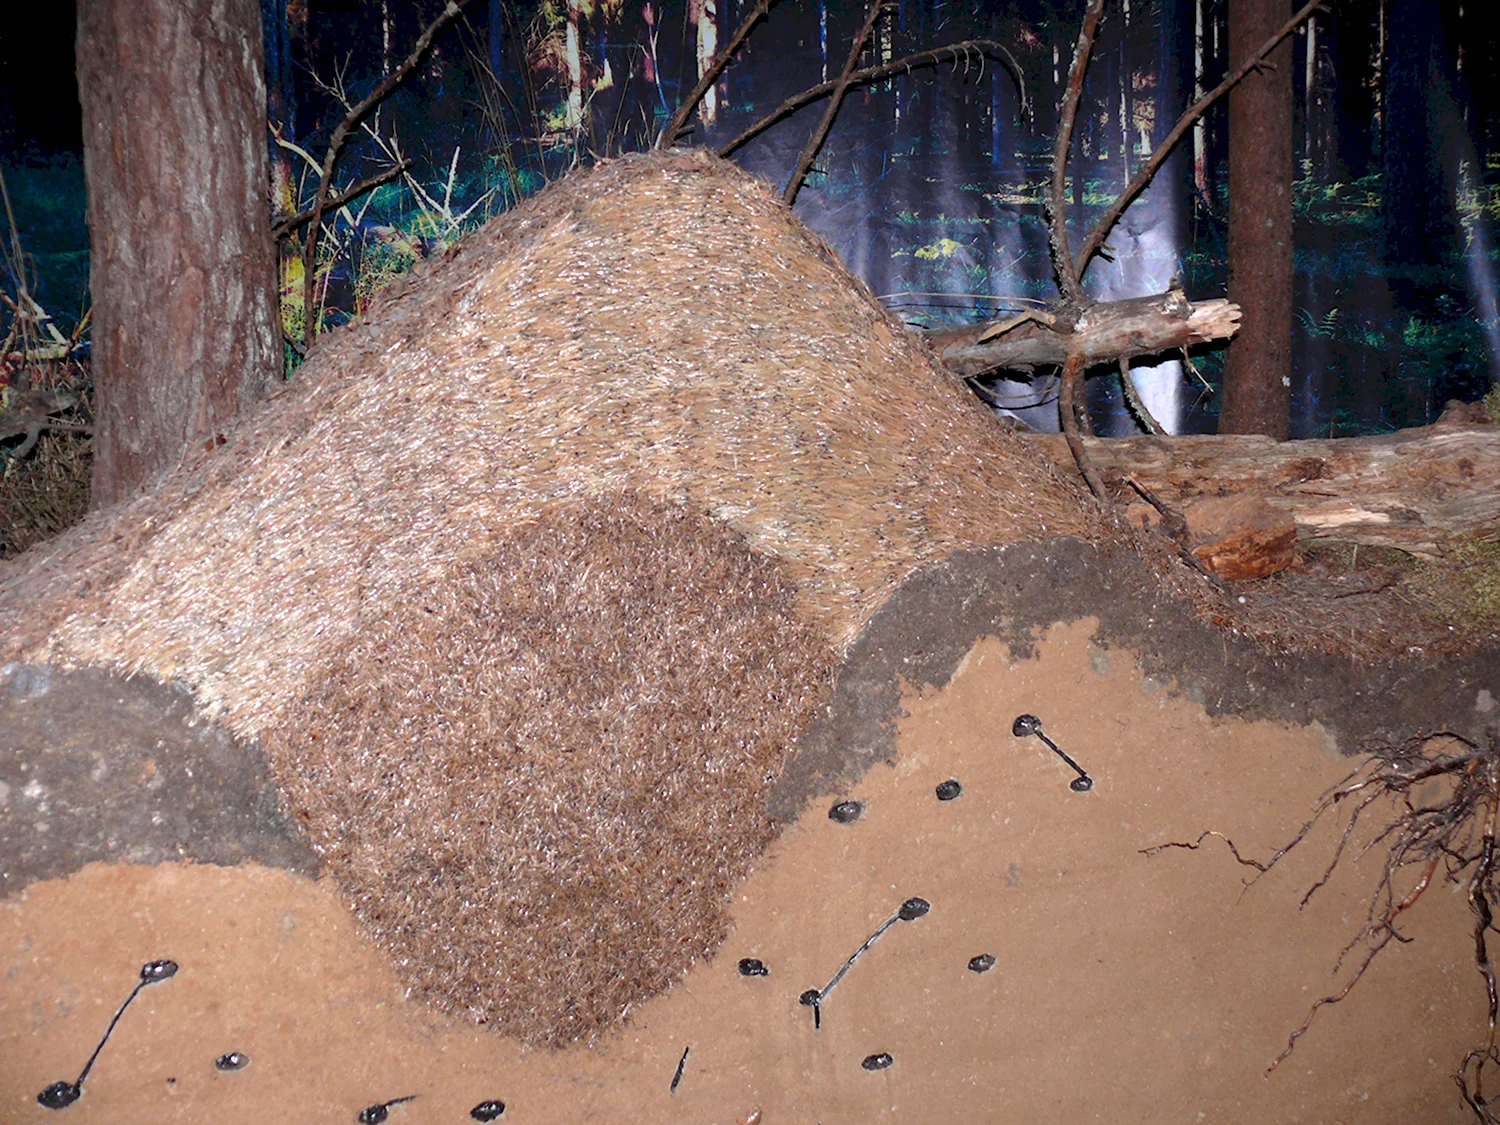 Муравейник жилище муравьев